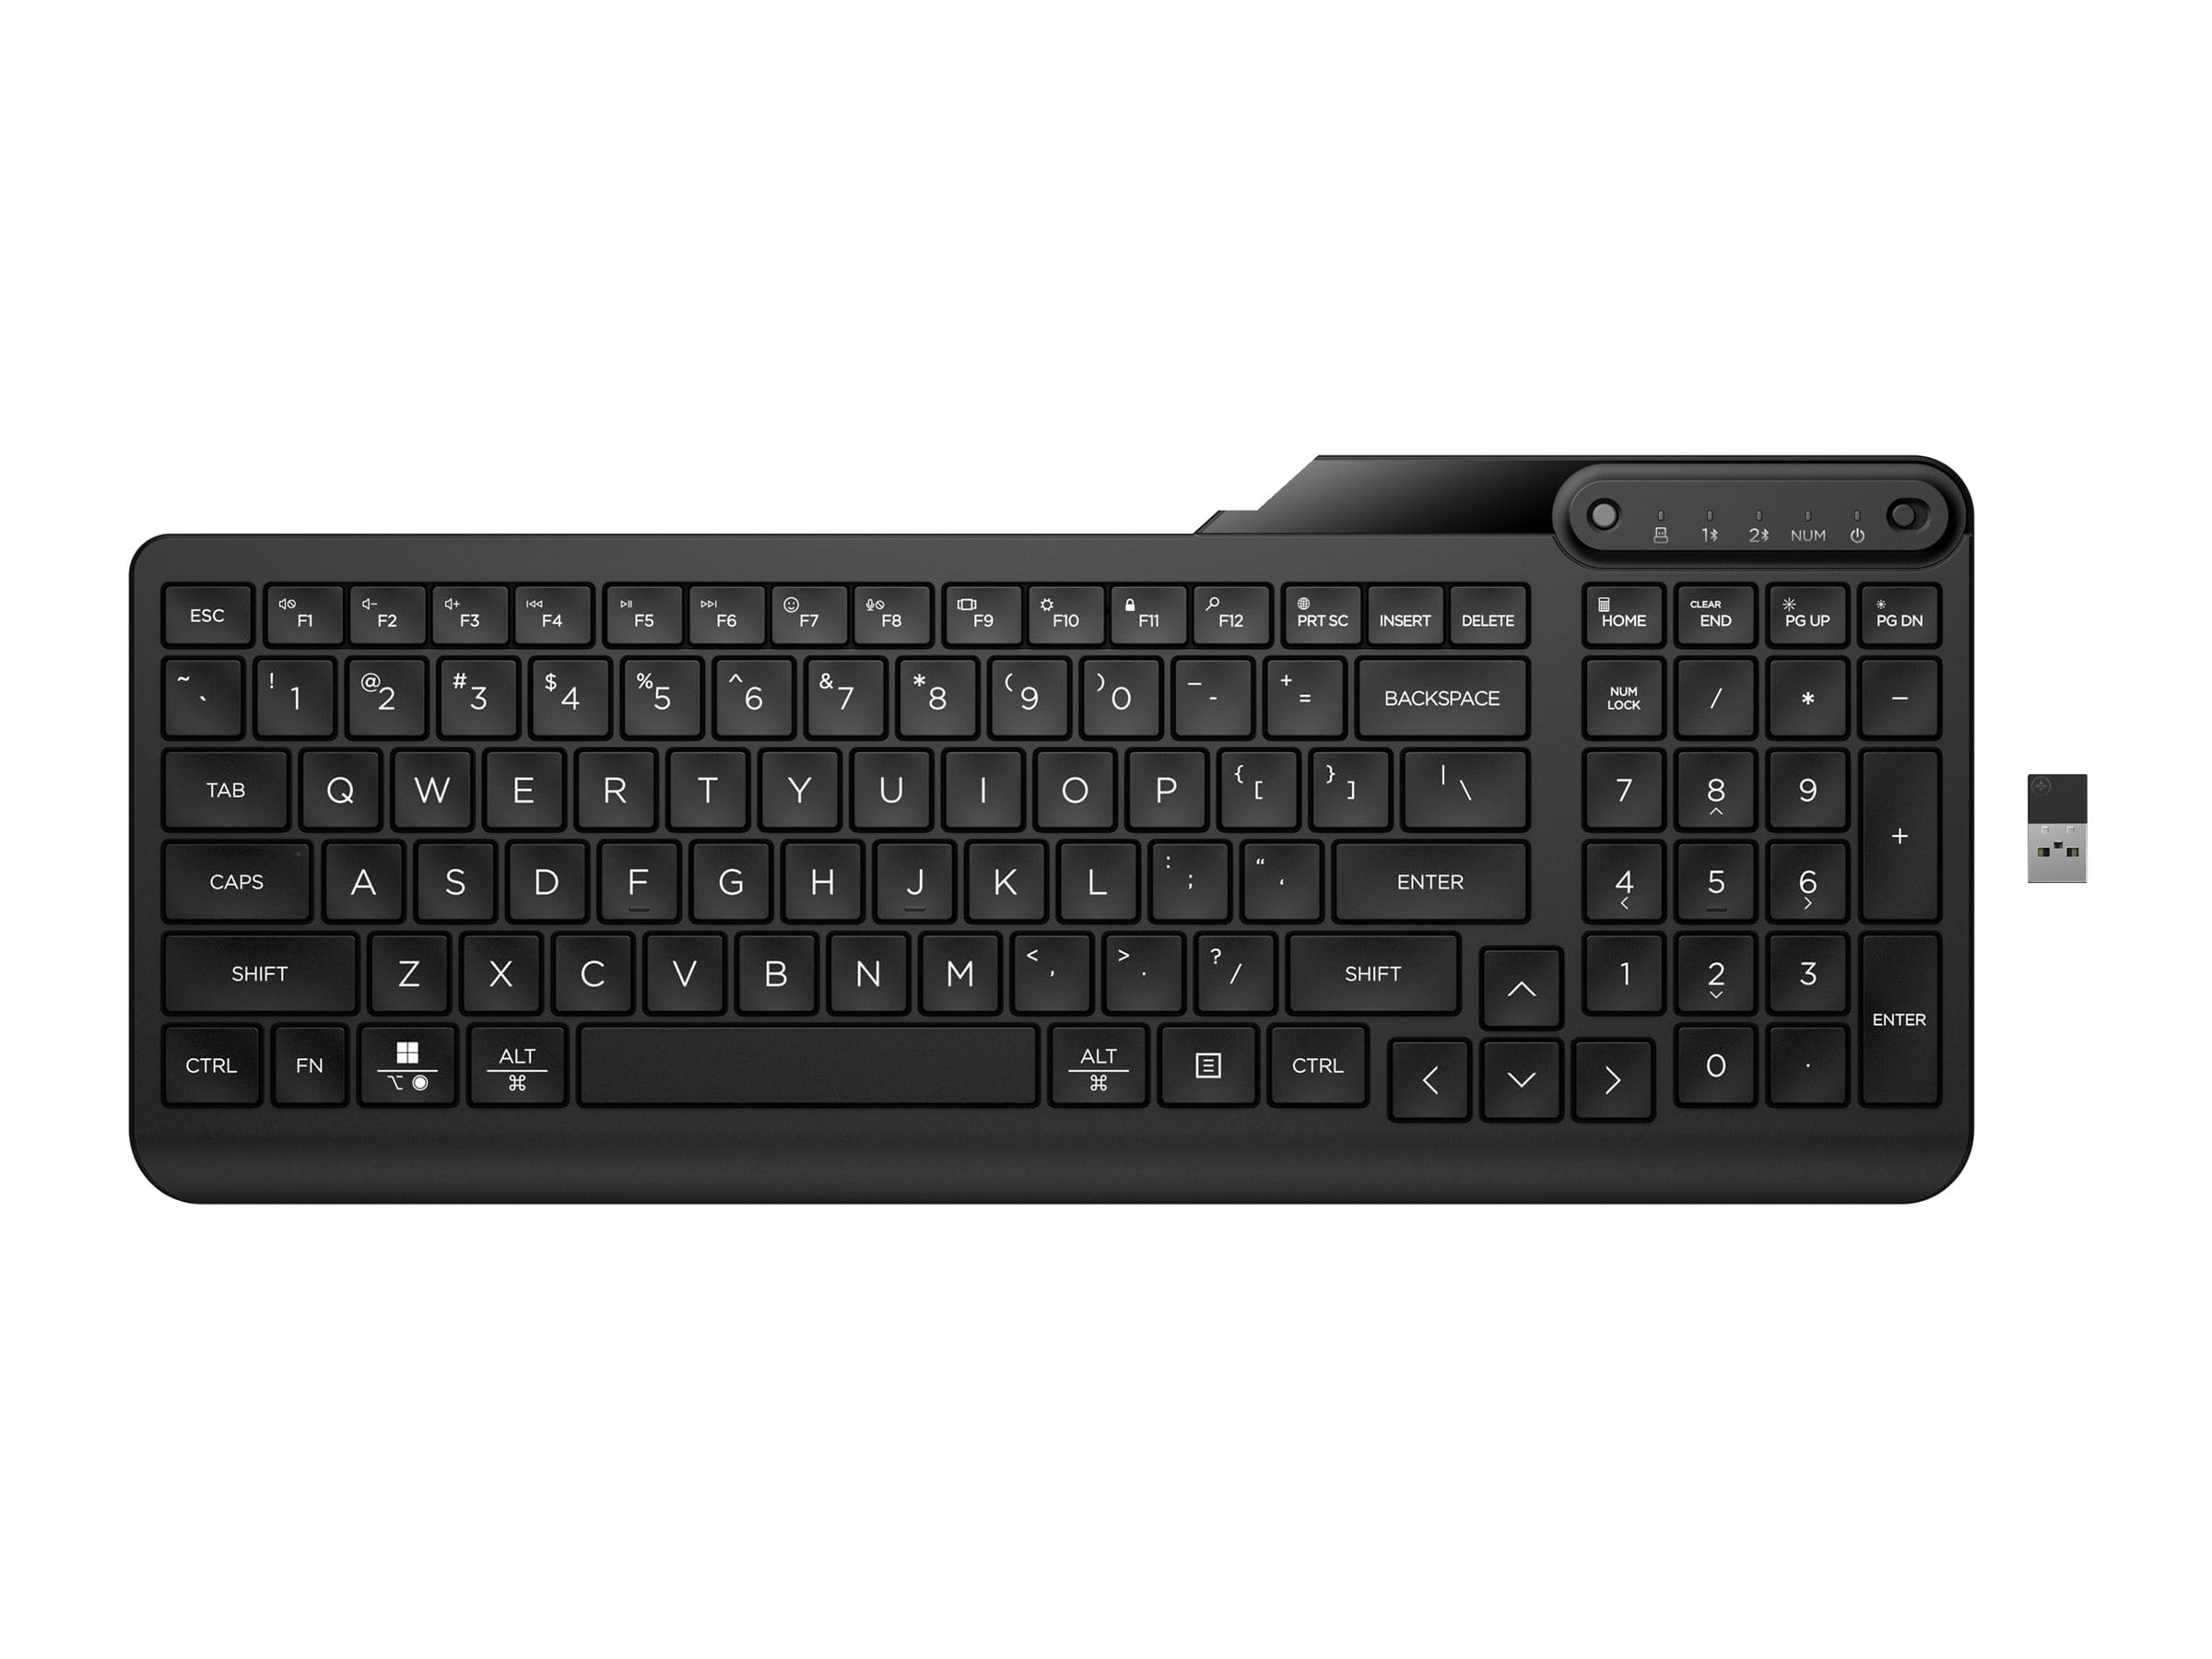 HP 475 - Tastatur - Dual-Mode, Multi-Device, kompakt, 2-Zonen-Layout, geringer Tastenhub, 12 programmierbare Tasten